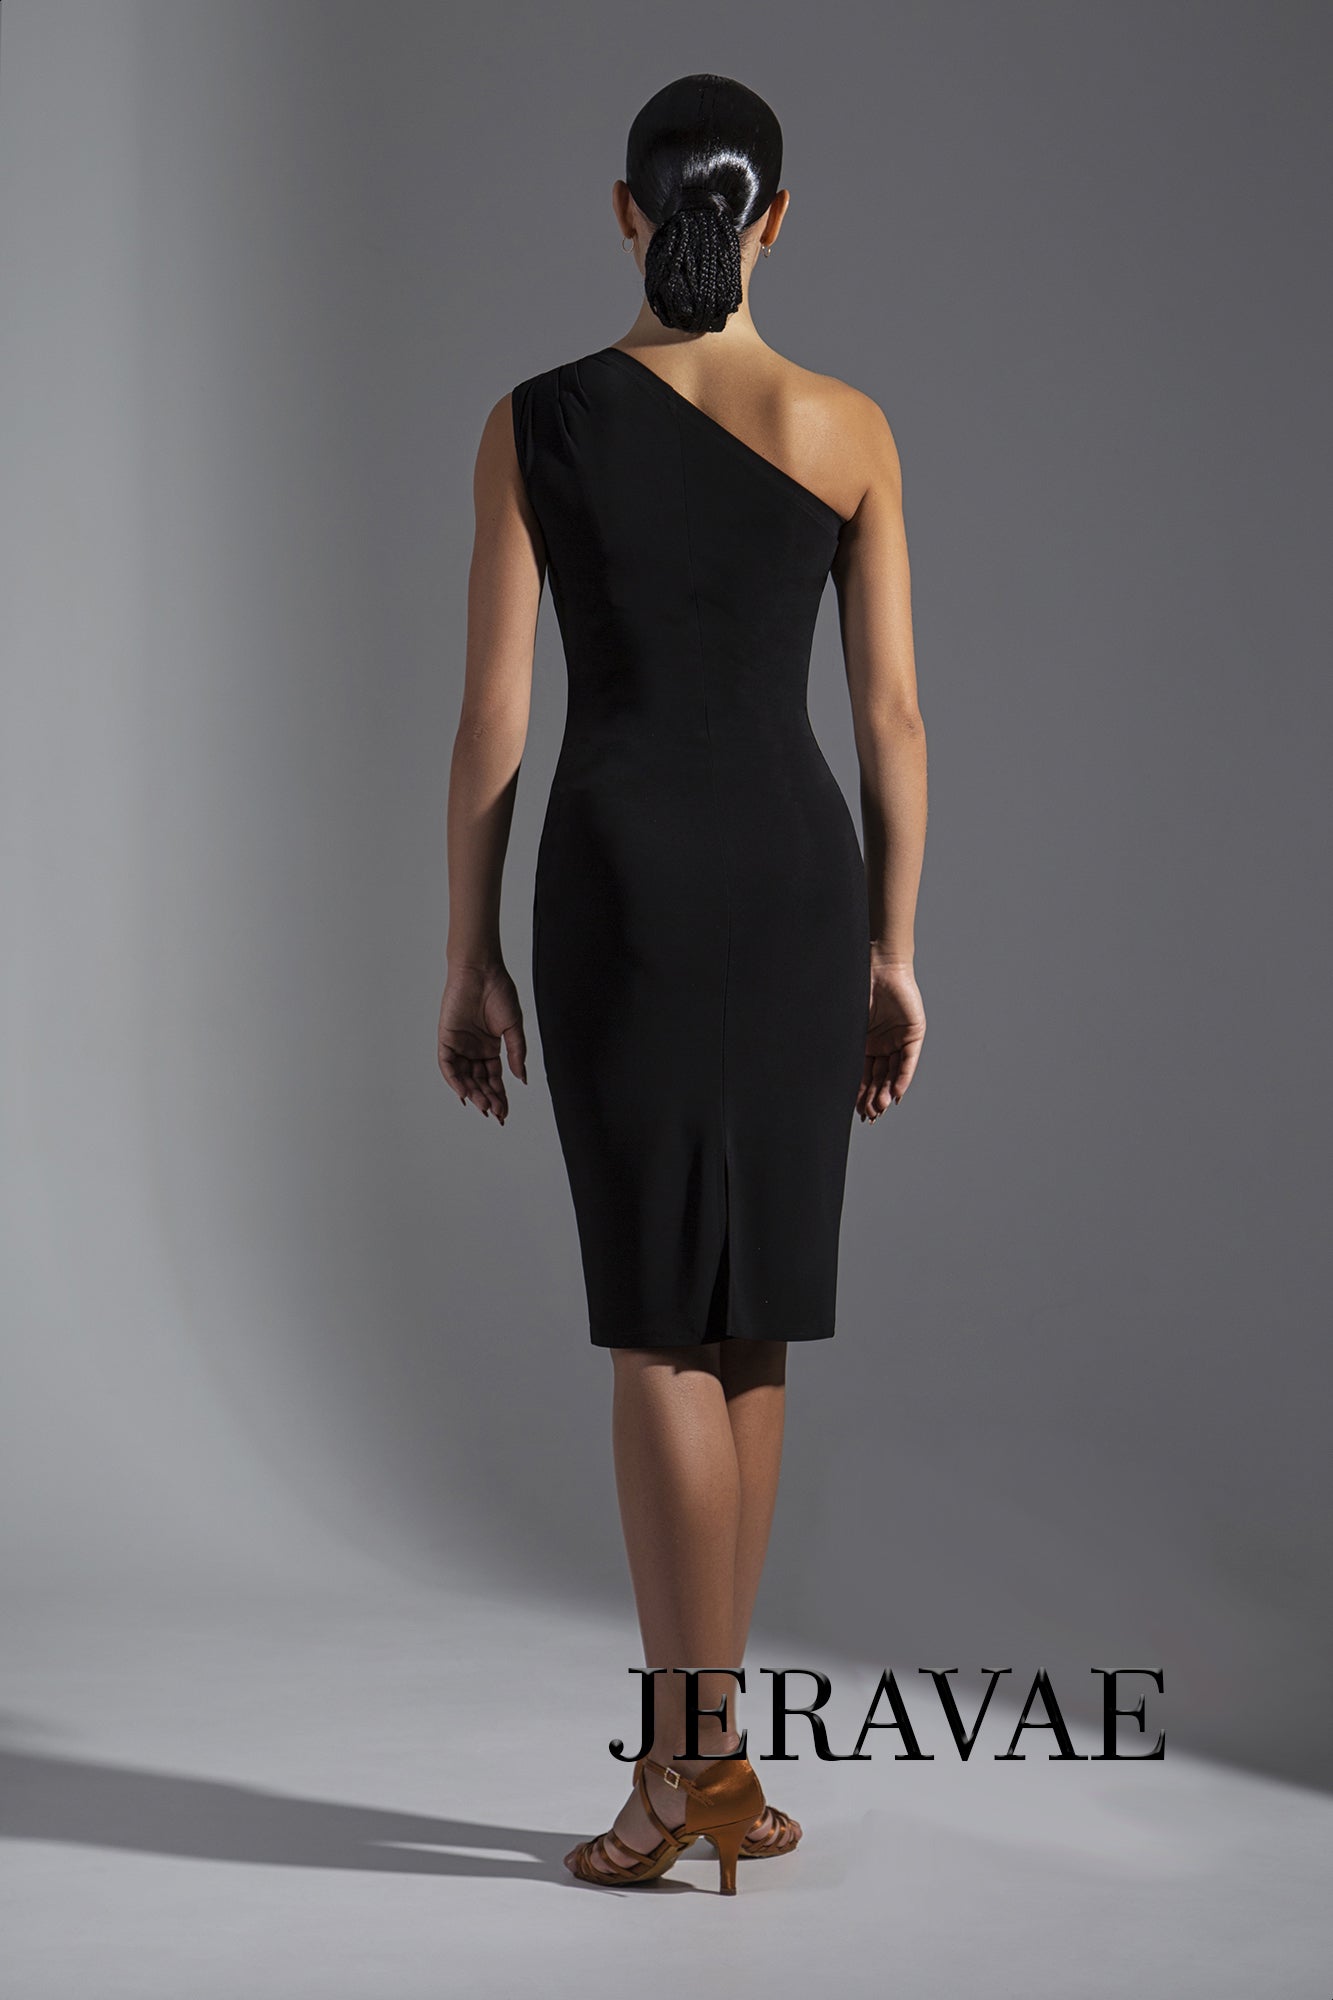 Single Shoulder Latin Practice Dress with Sleek Skirt and Gathered Waist Detail PRA 573